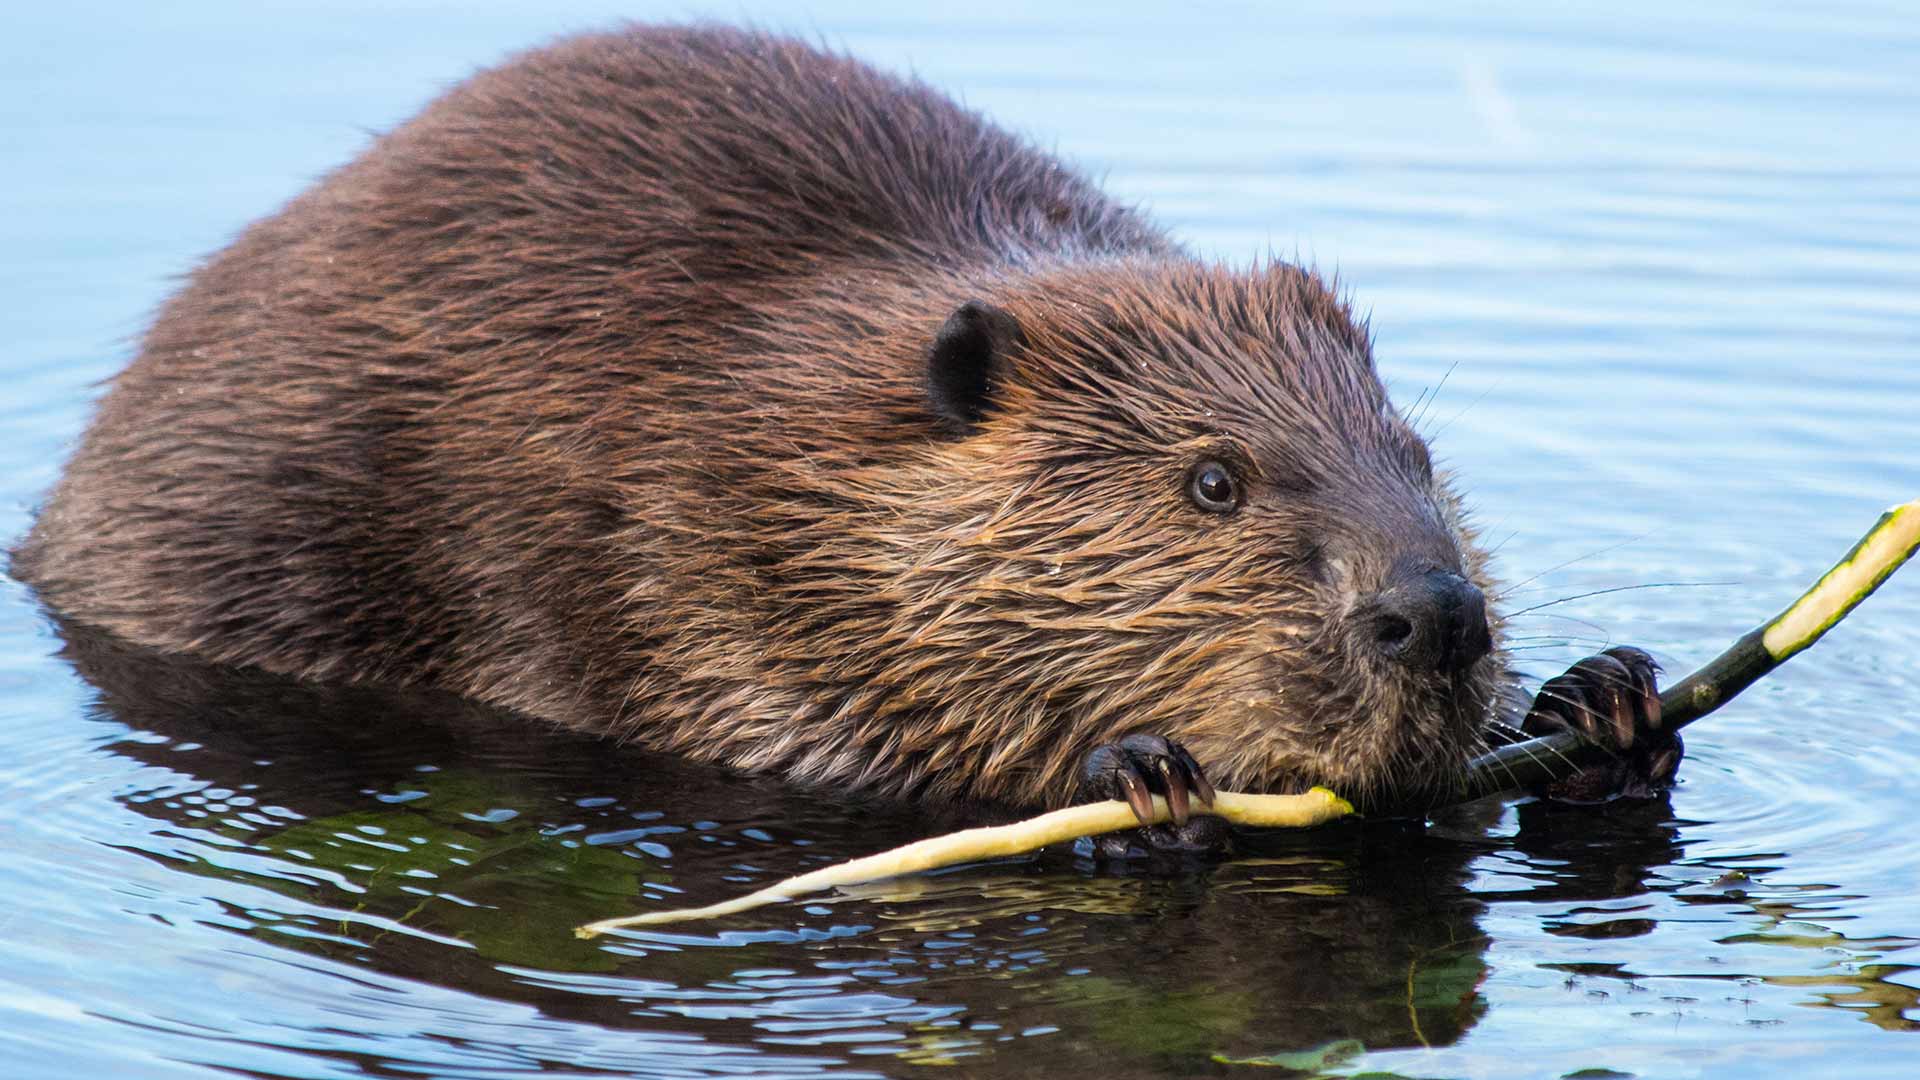 A beaver munching on a twig